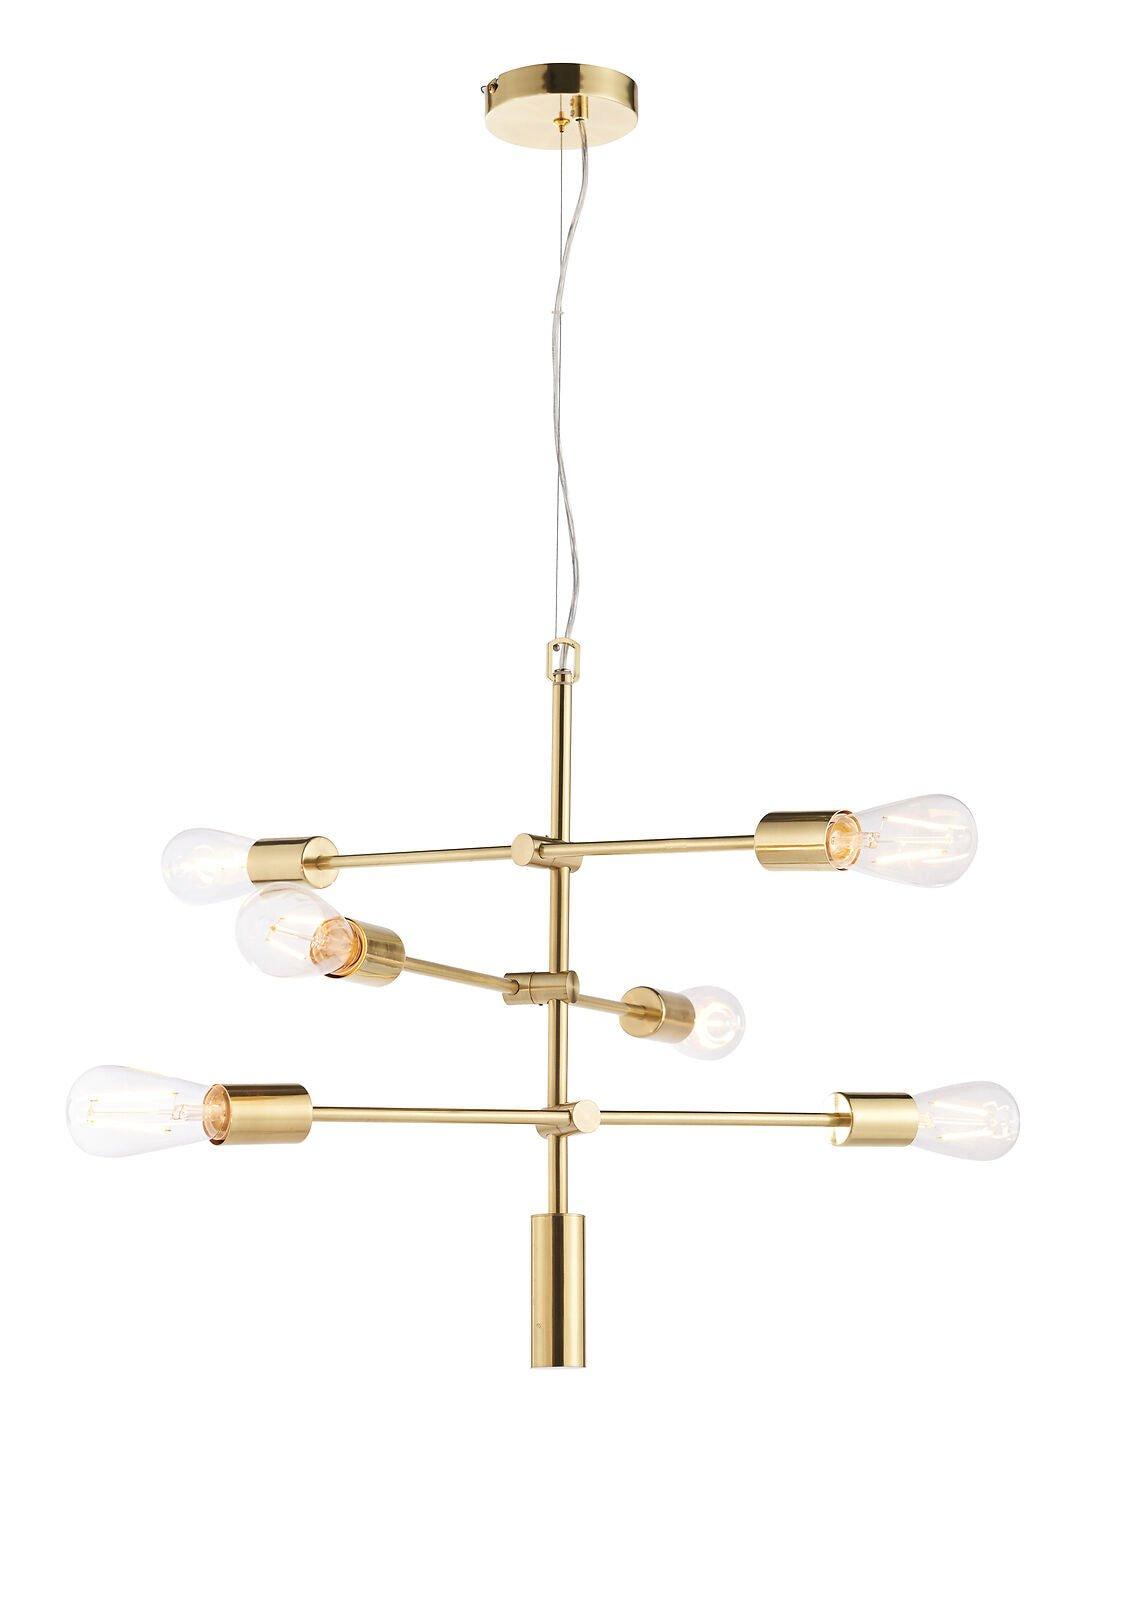 Ceiling Pendant Light Satin Brass Plate 6x60W E27 Dimmable Multi Arm Lamp